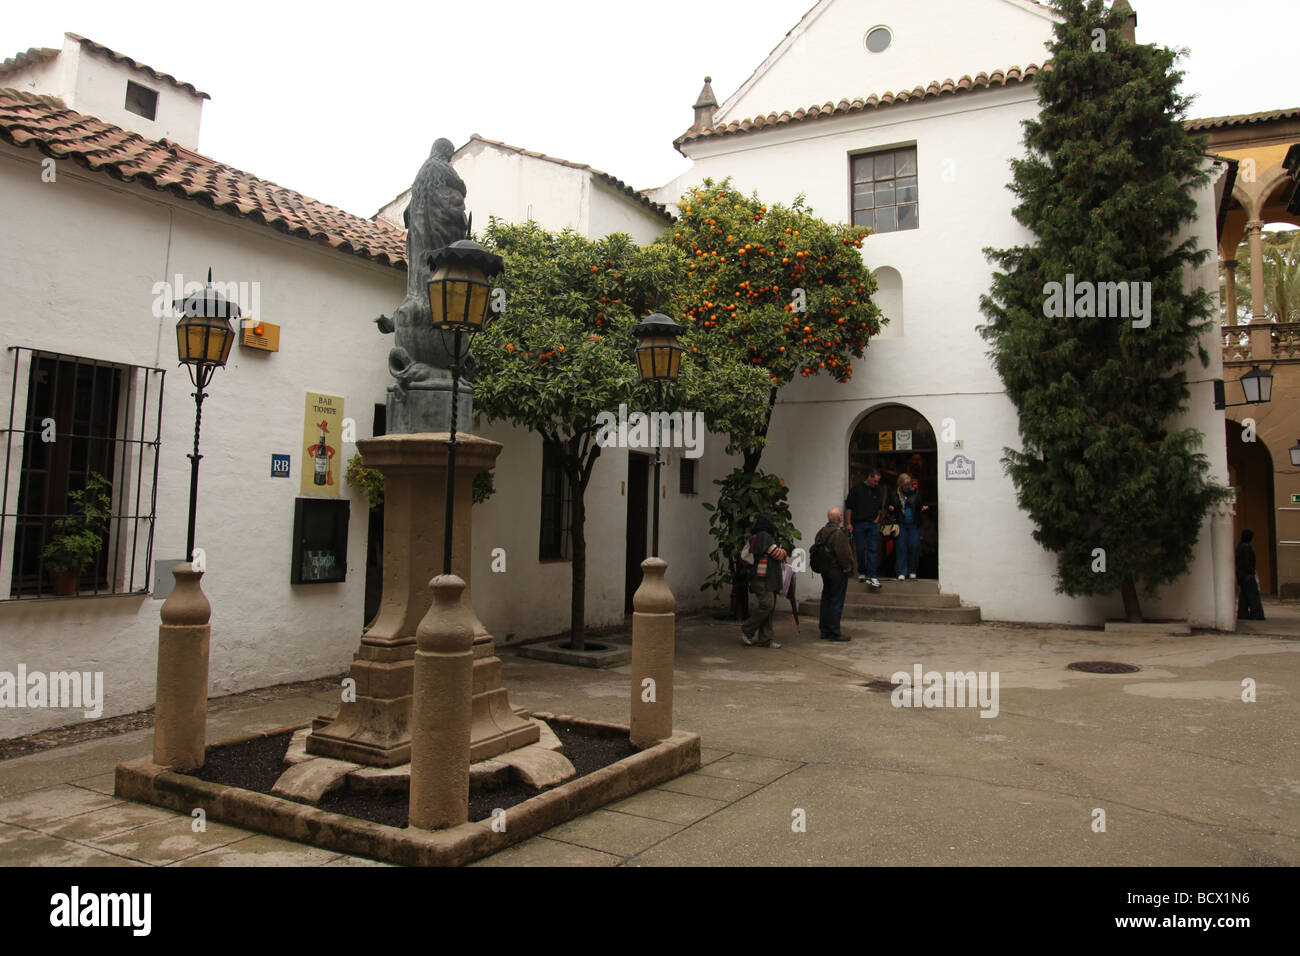 Poble Espanyol (spanish village) buildings white windows orange trees lamps iron railings monument Stock Photo